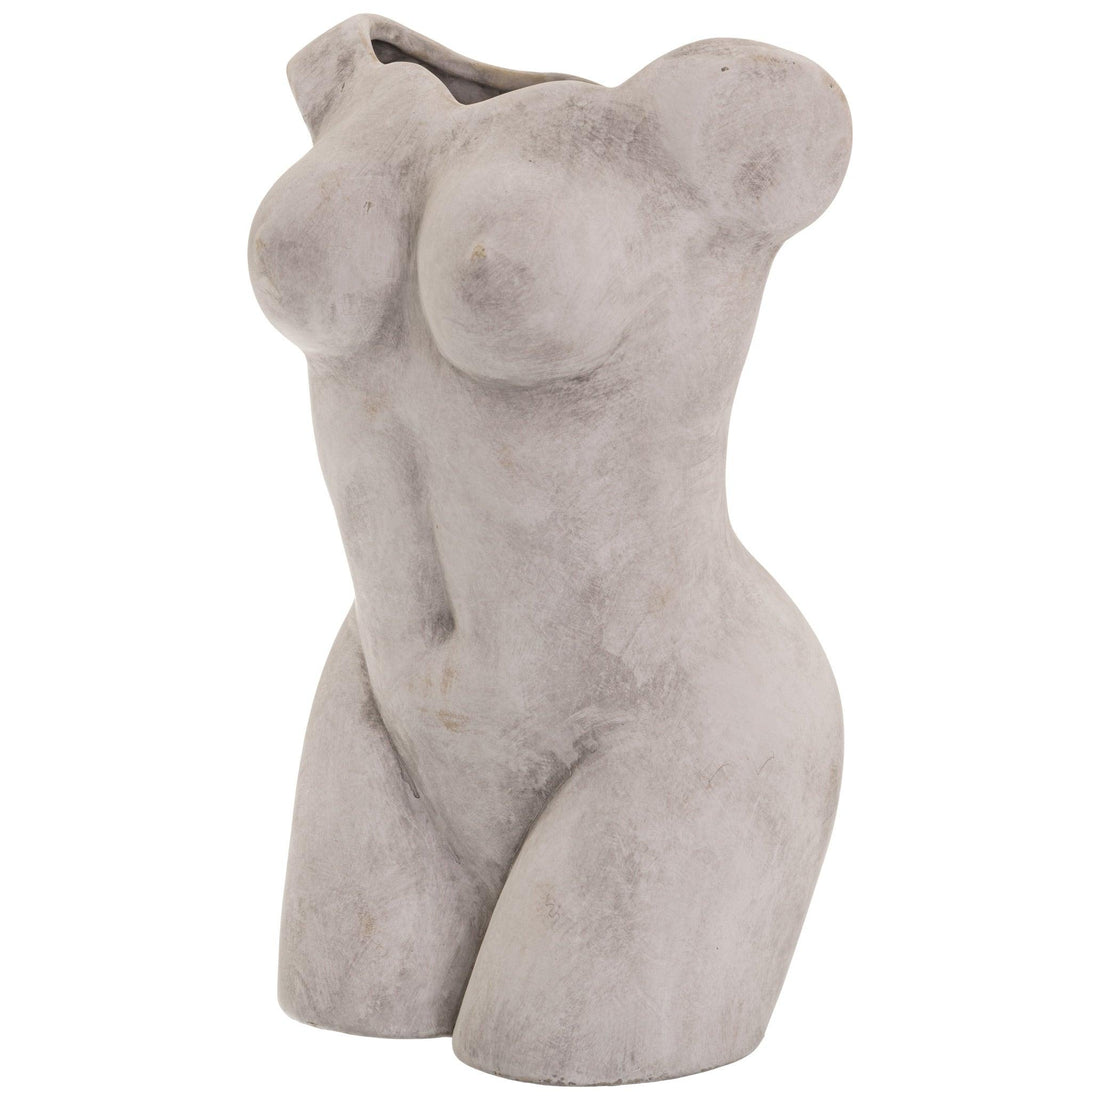 Female Figure Vase - £79.95 - Gifts & Accessories > Vases 